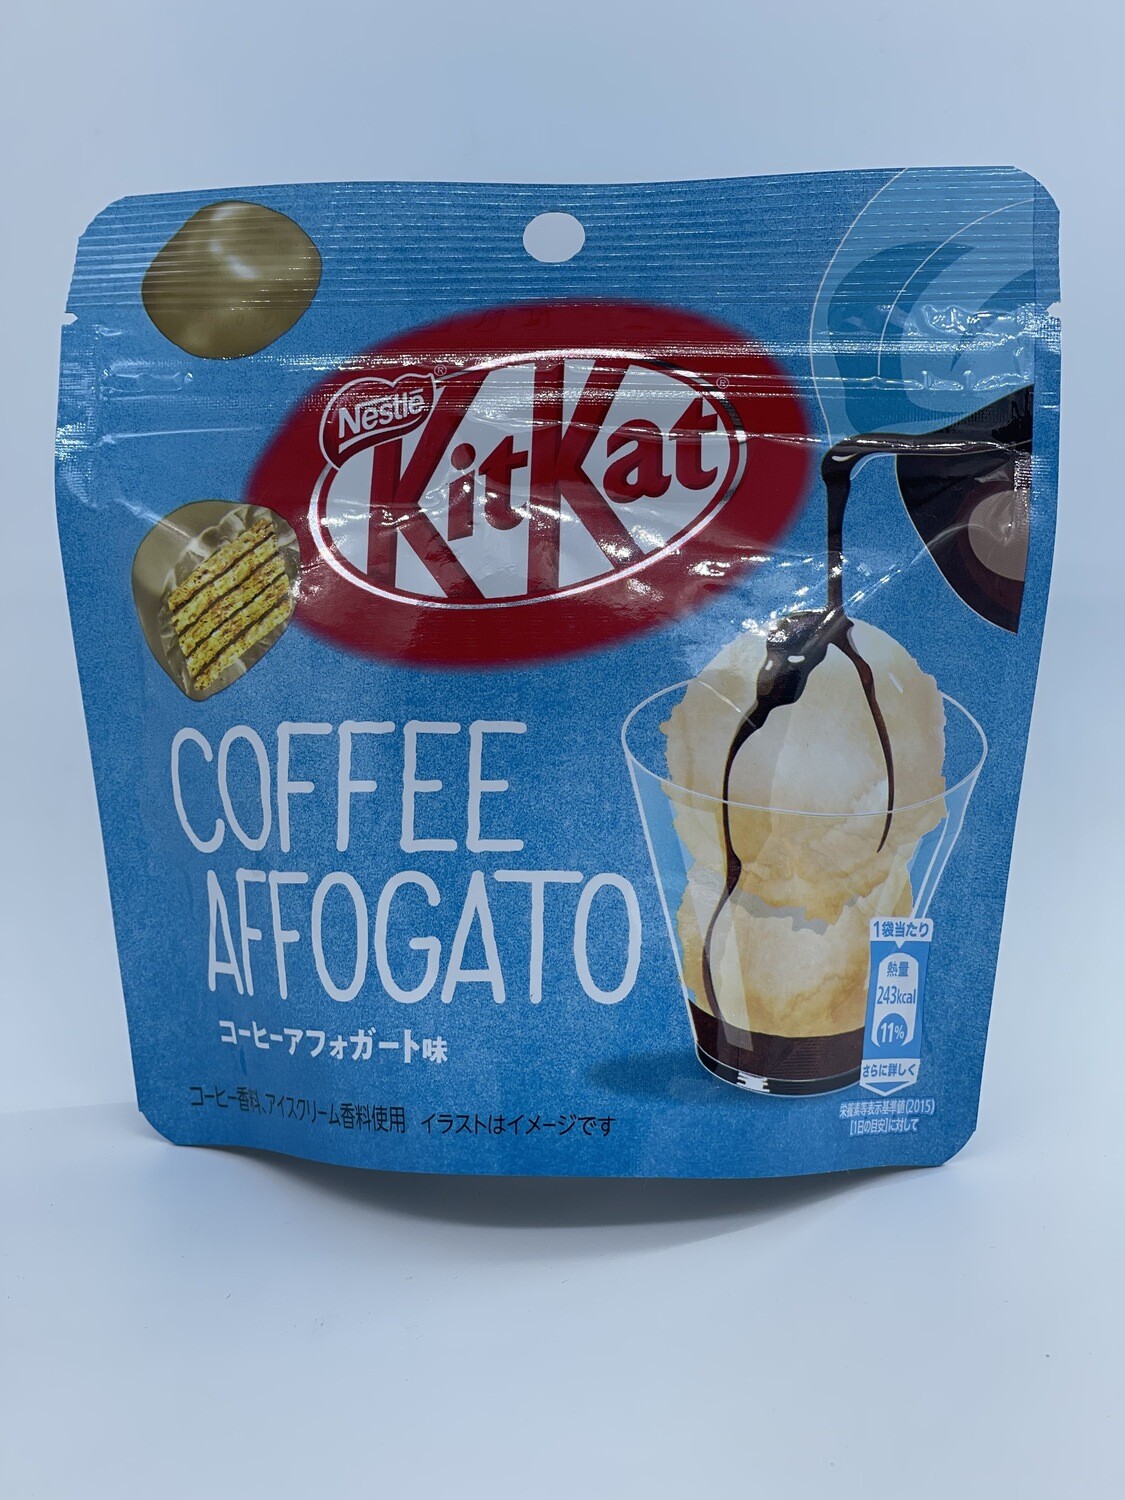 Kit Kat Coffee Affogato